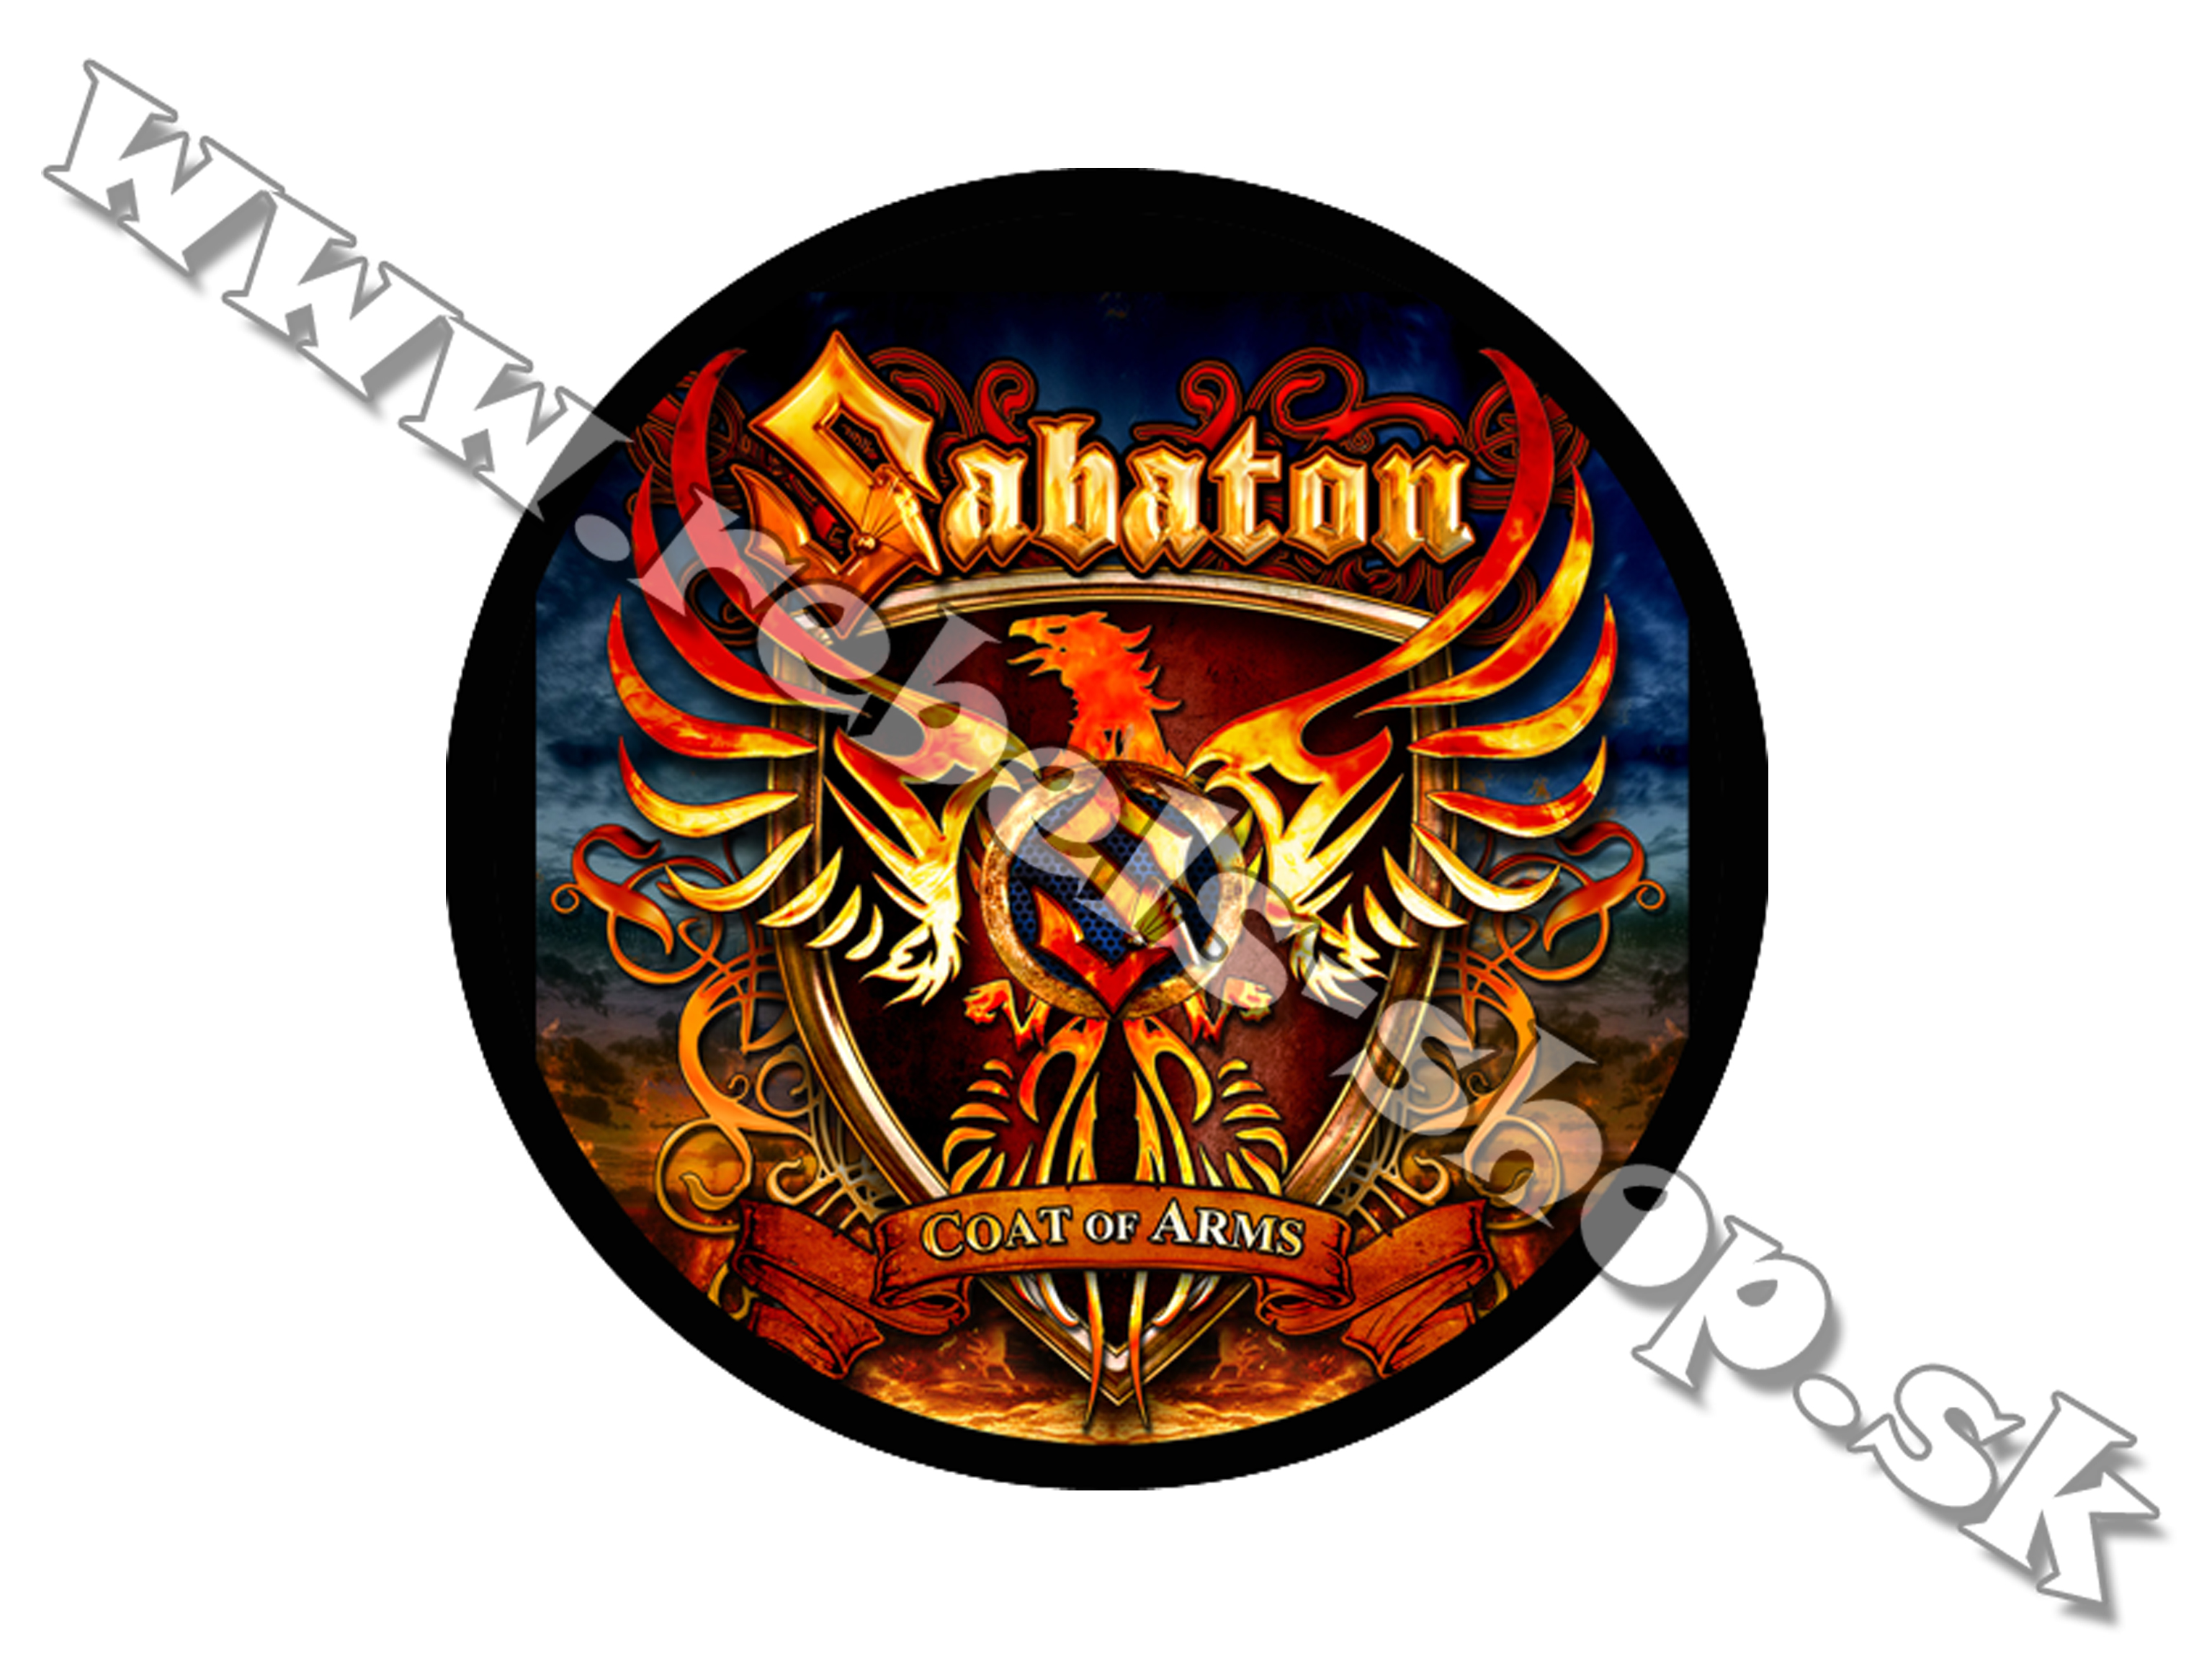 Odznak "Sabaton"